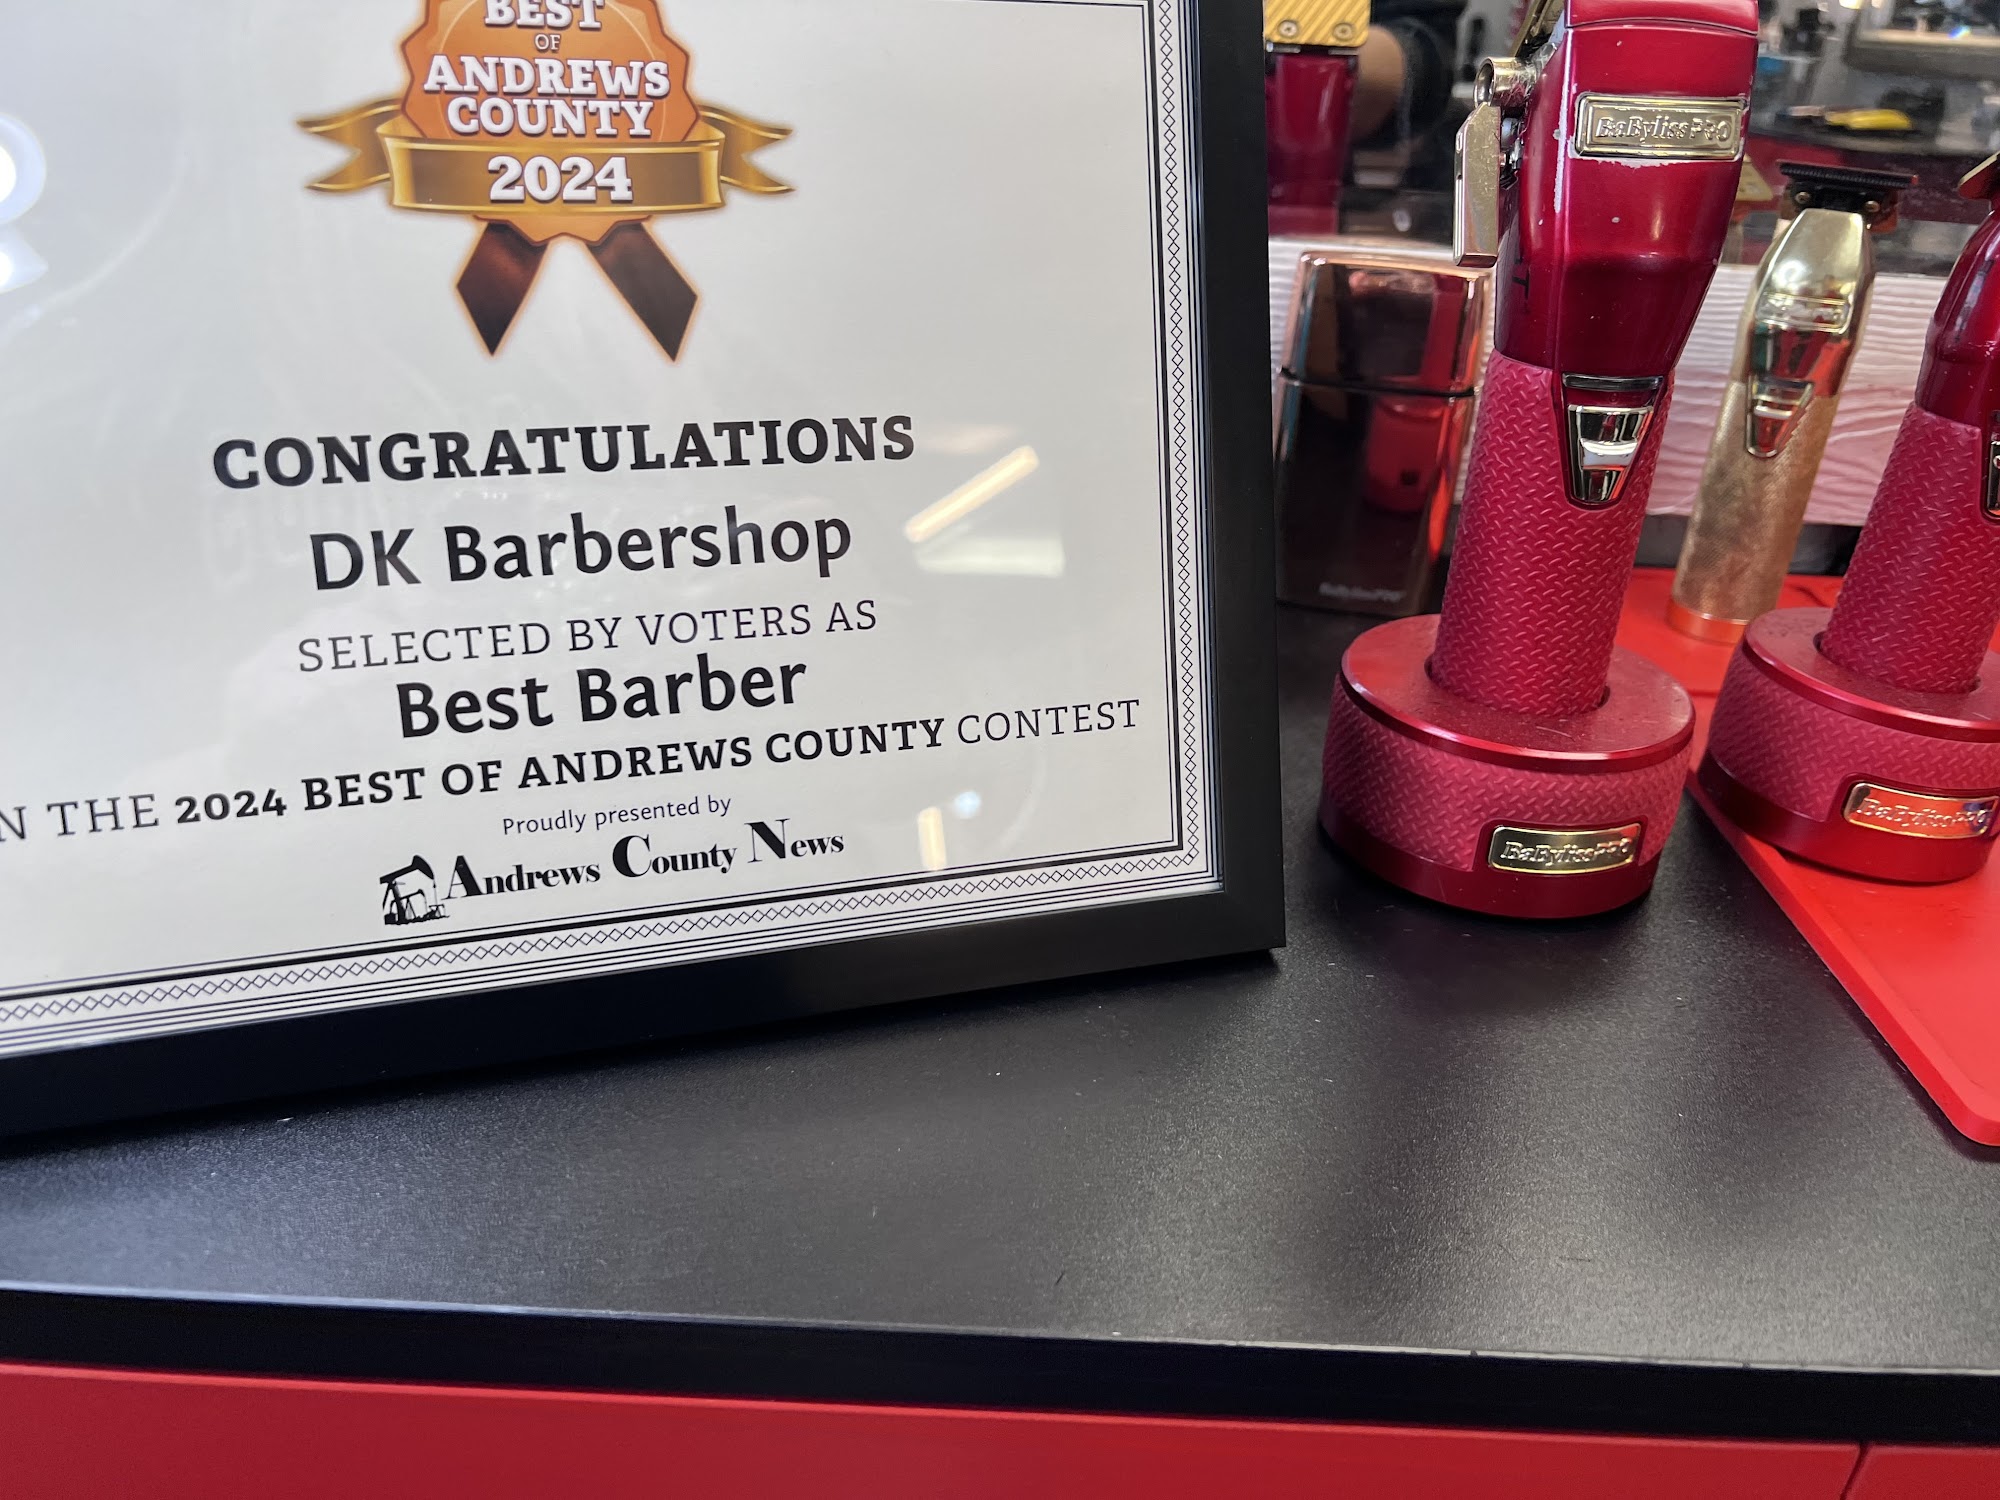 DK Barbershop 503 E Broadway St, Andrews Texas 79714